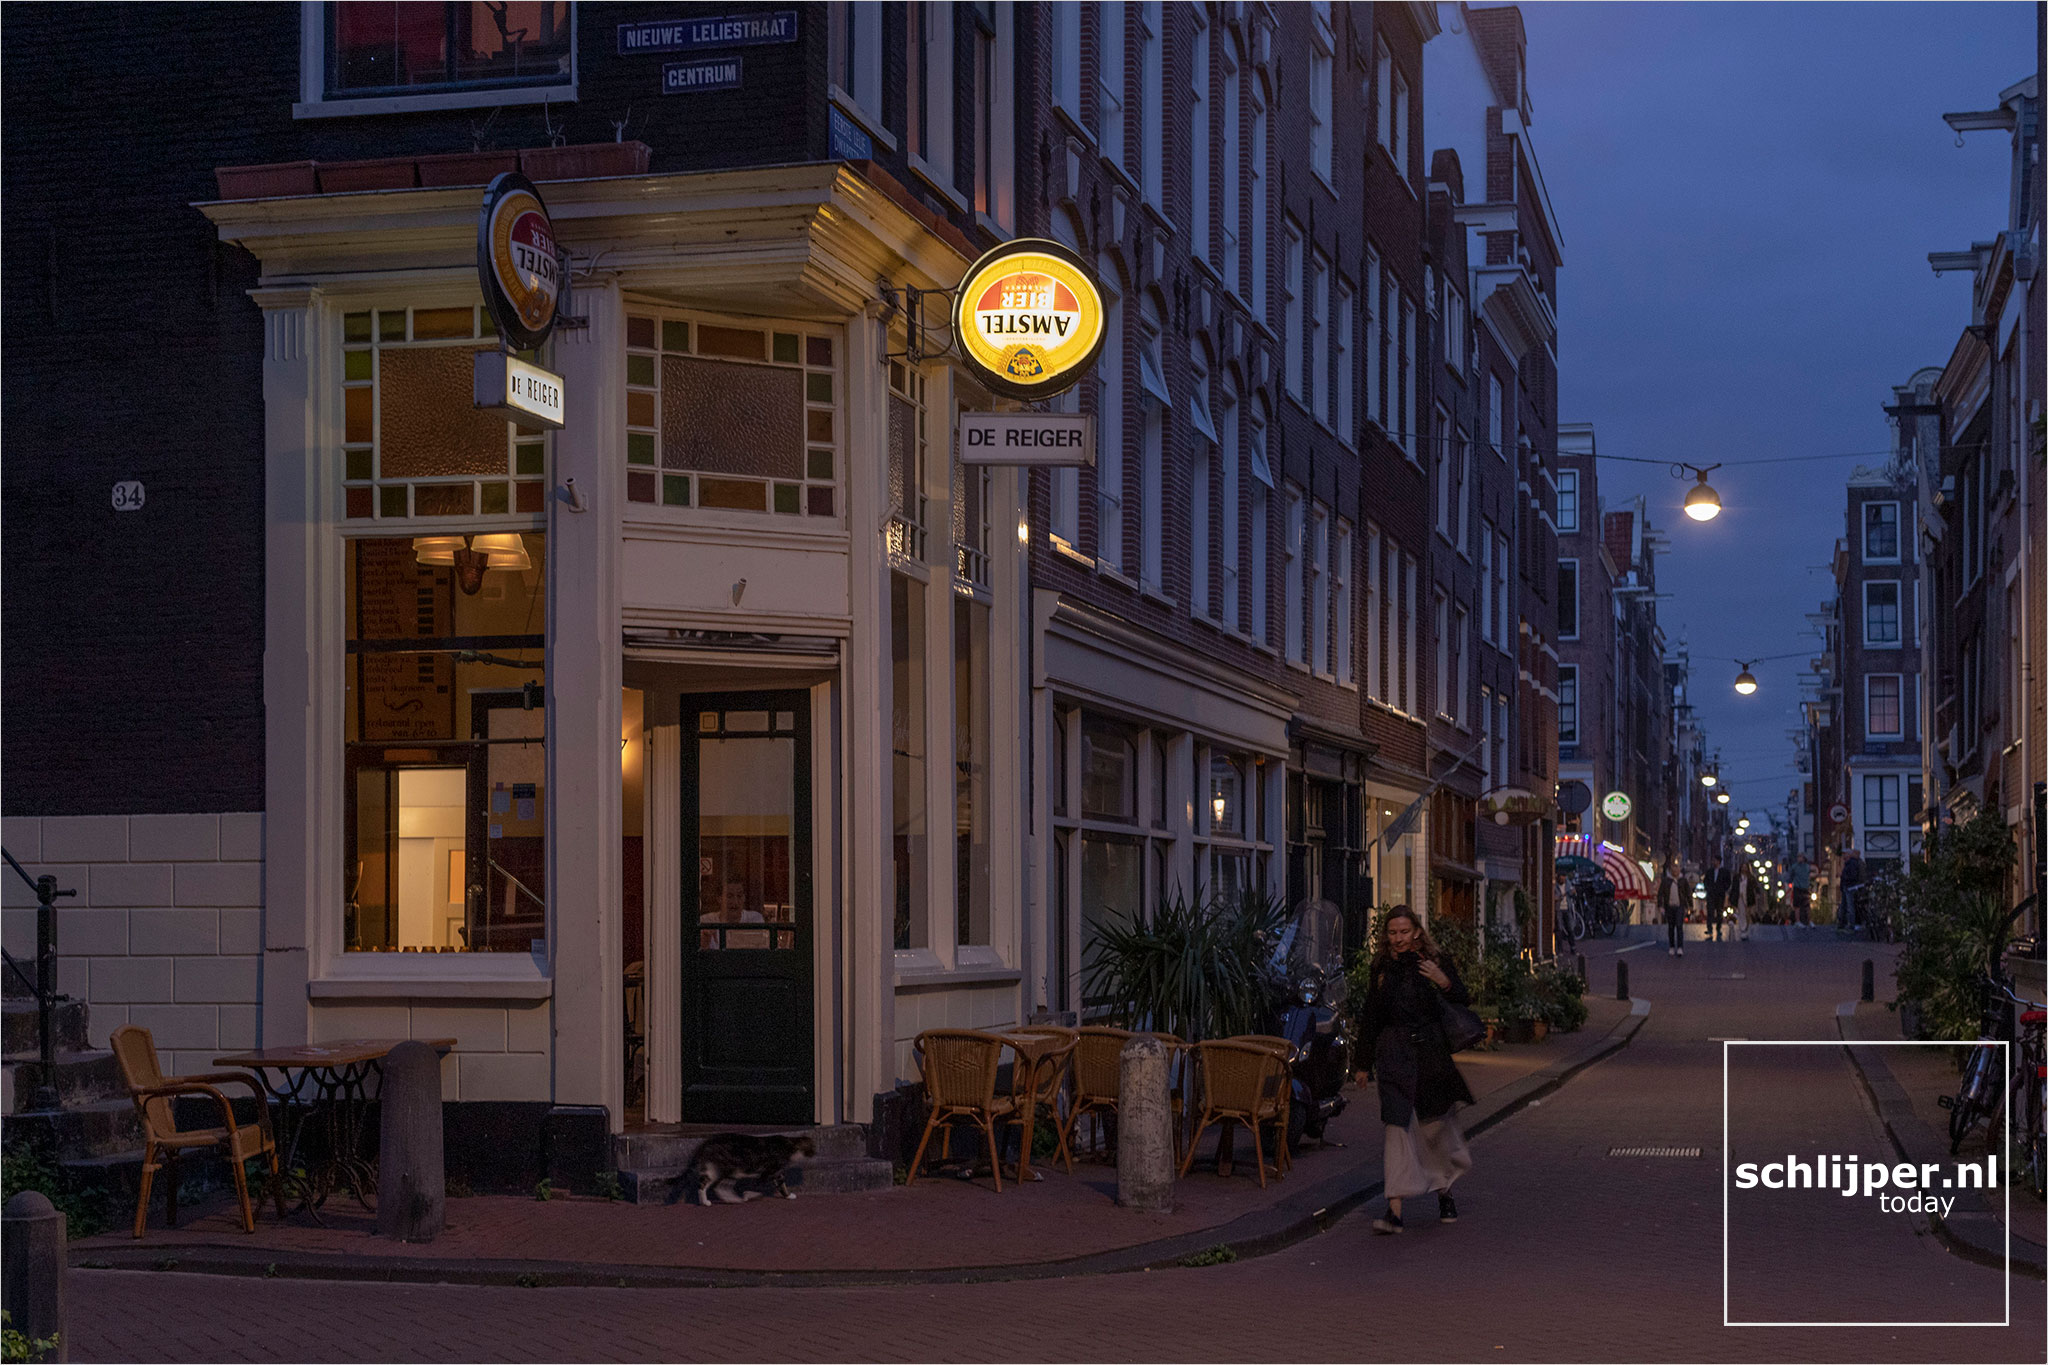 The Netherlands, Amsterdam, 18 augustus 2021